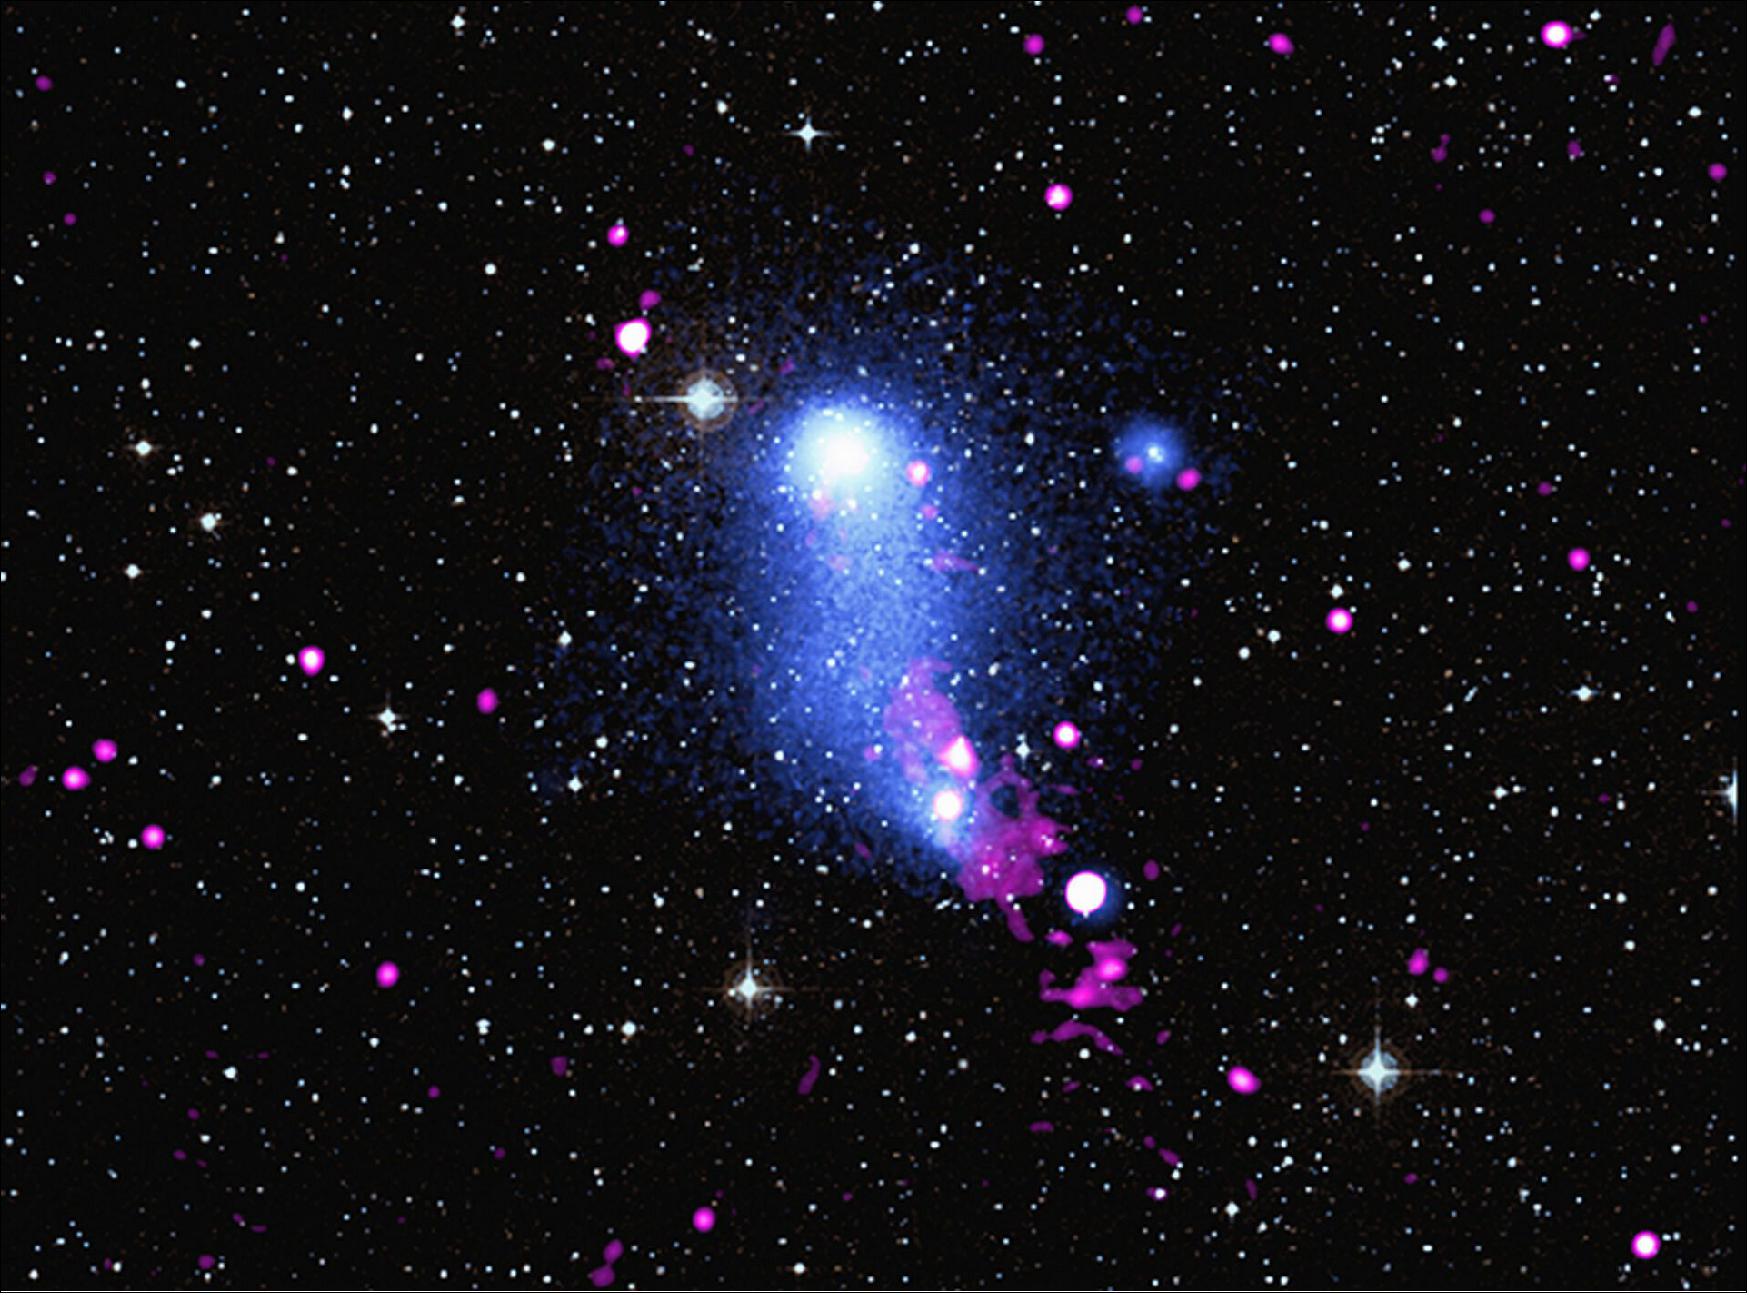 Figure 33: Bridge between galaxy clusters in Abell 2384 (image credit: X-ray: NASA/CXC/SAO/V. Parekh, et al. & ESA/XMM-Newton; Radio: NCRA/GMRT)